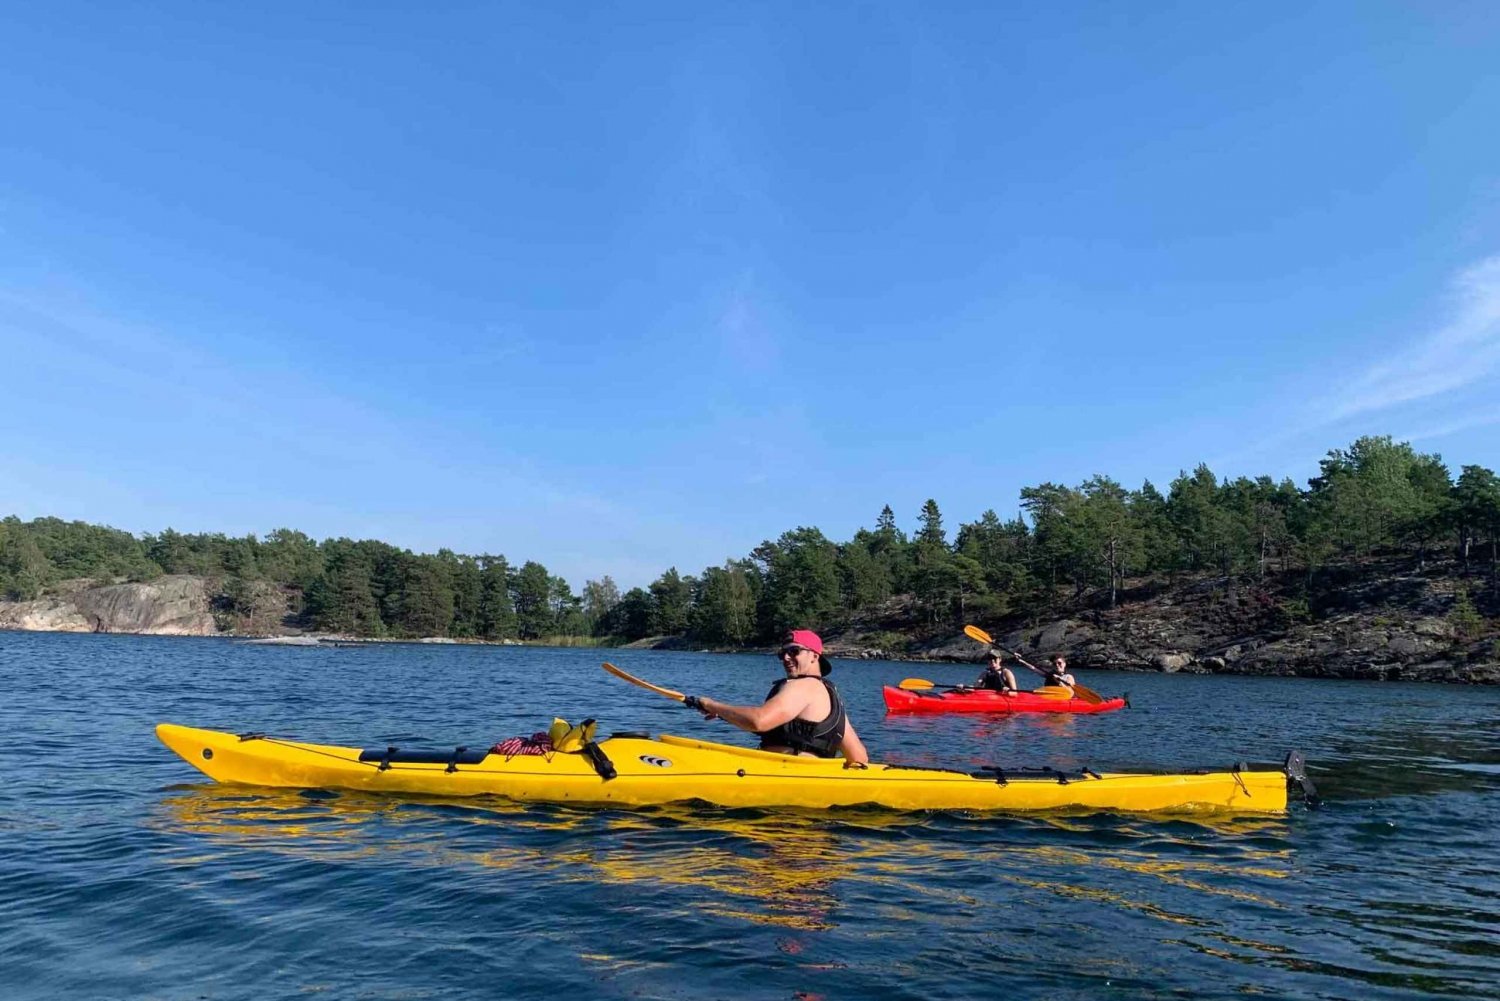 Stoccolma: Tour mattutino in kayak nell'arcipelago + pranzo